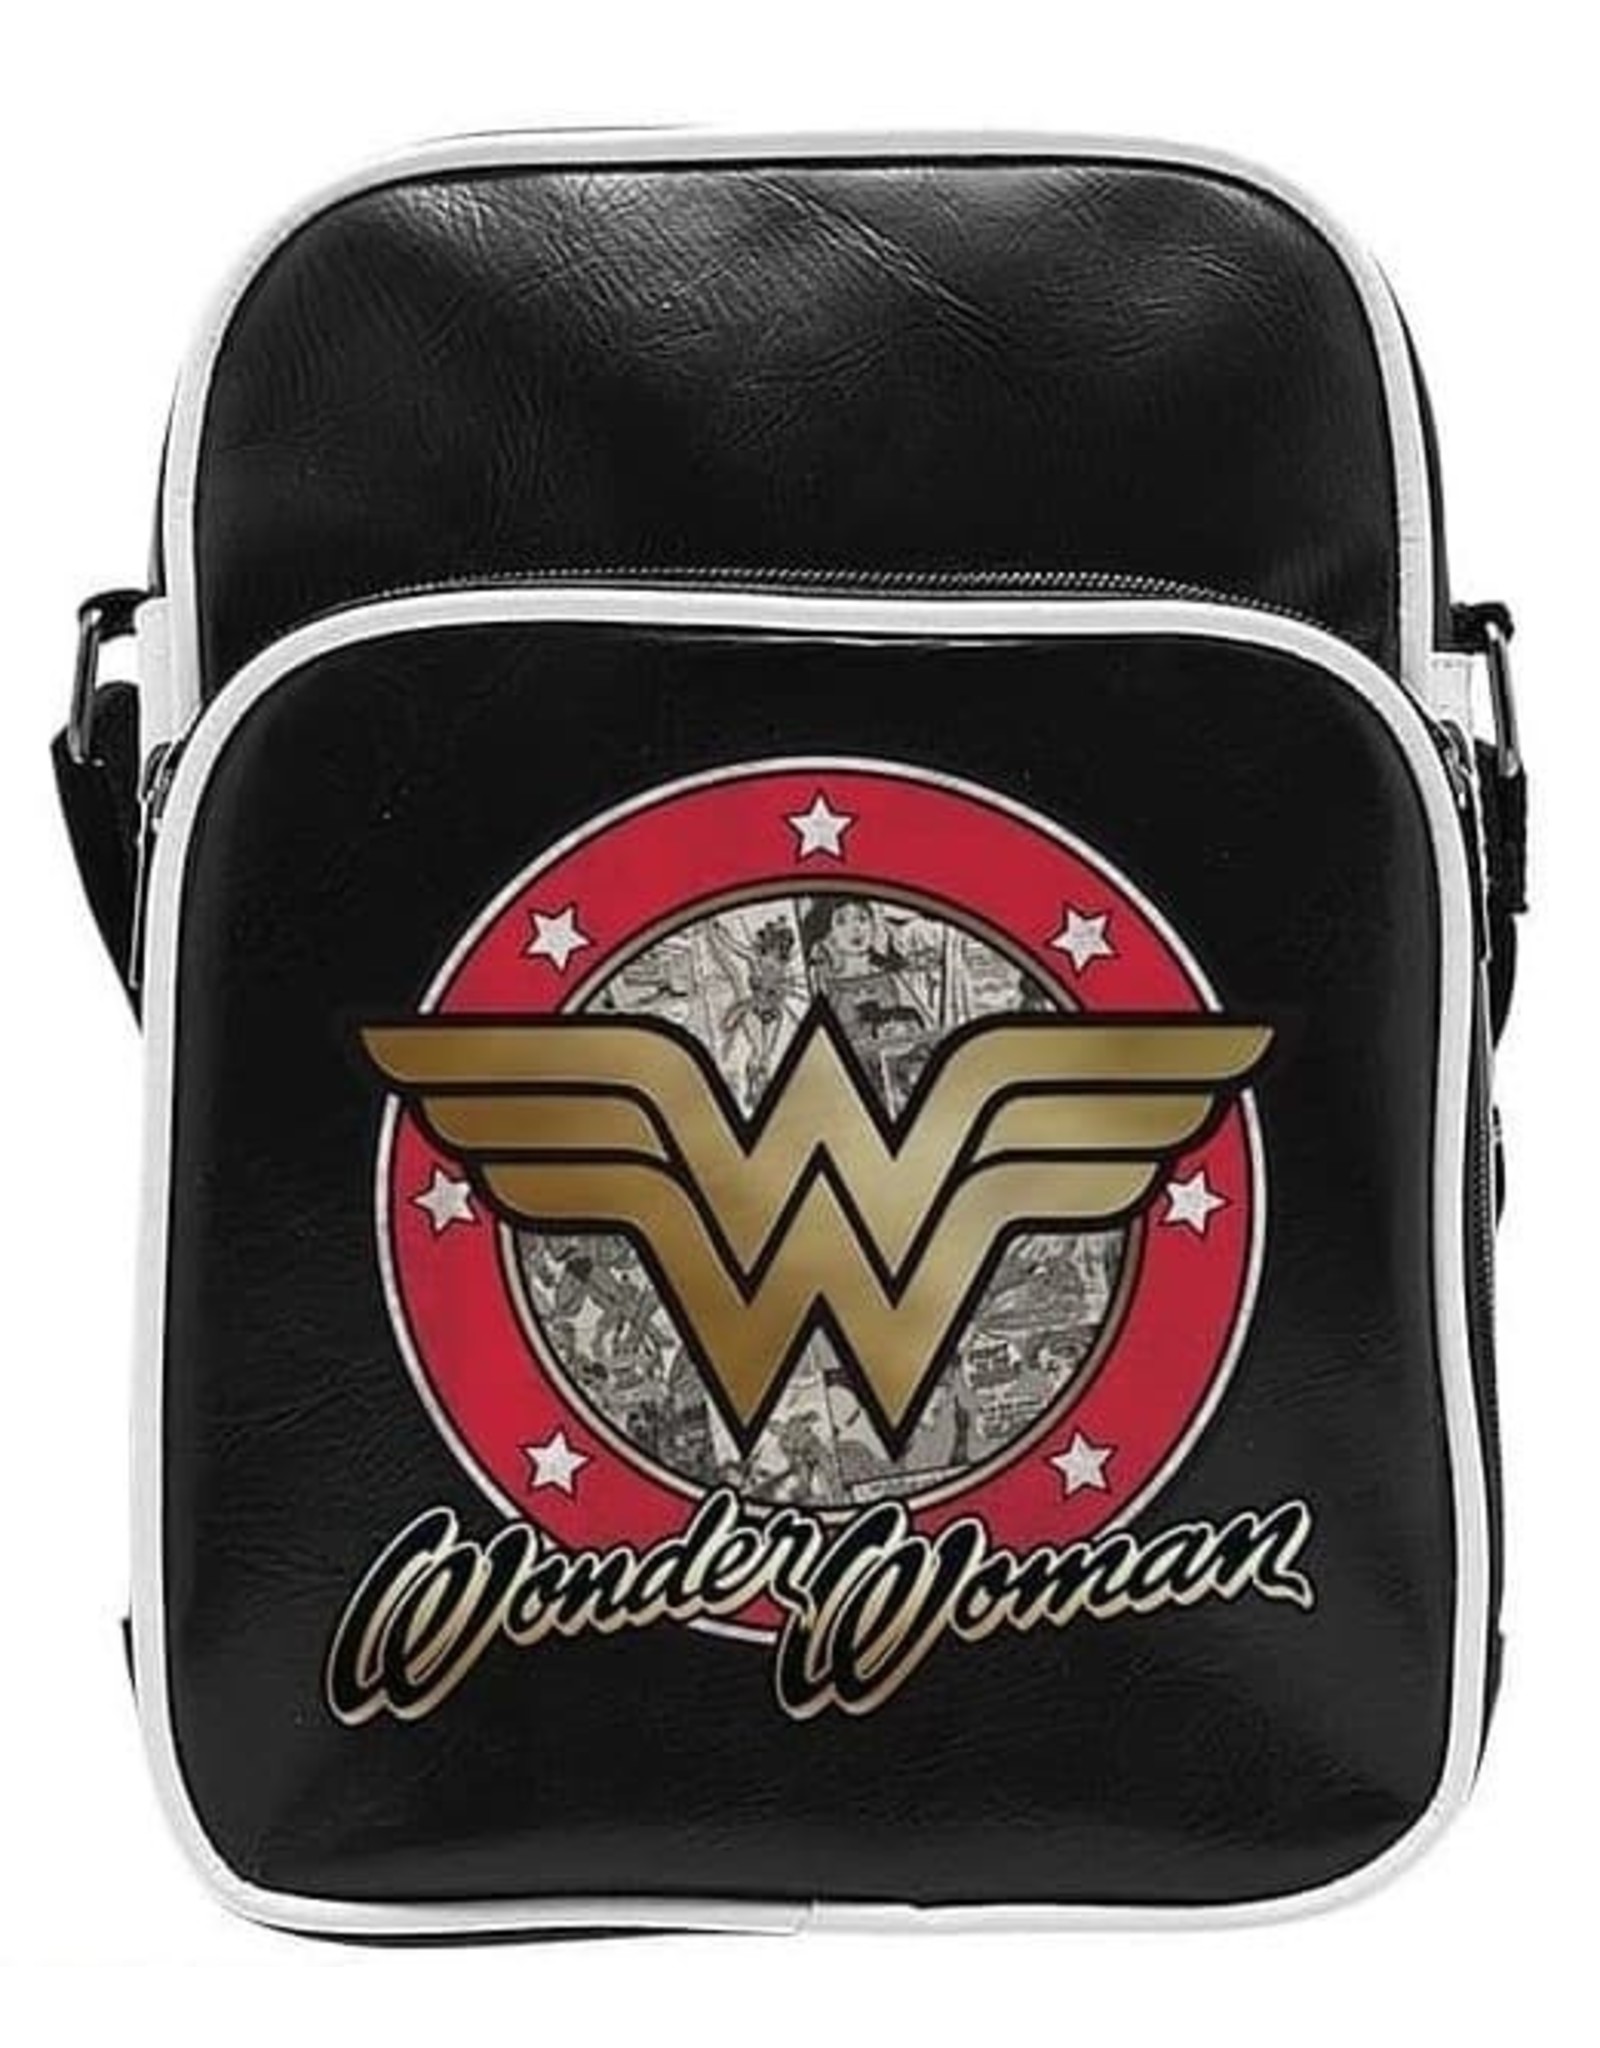 Merchsndise bags DC Comics Wonder Women Shoulder bag